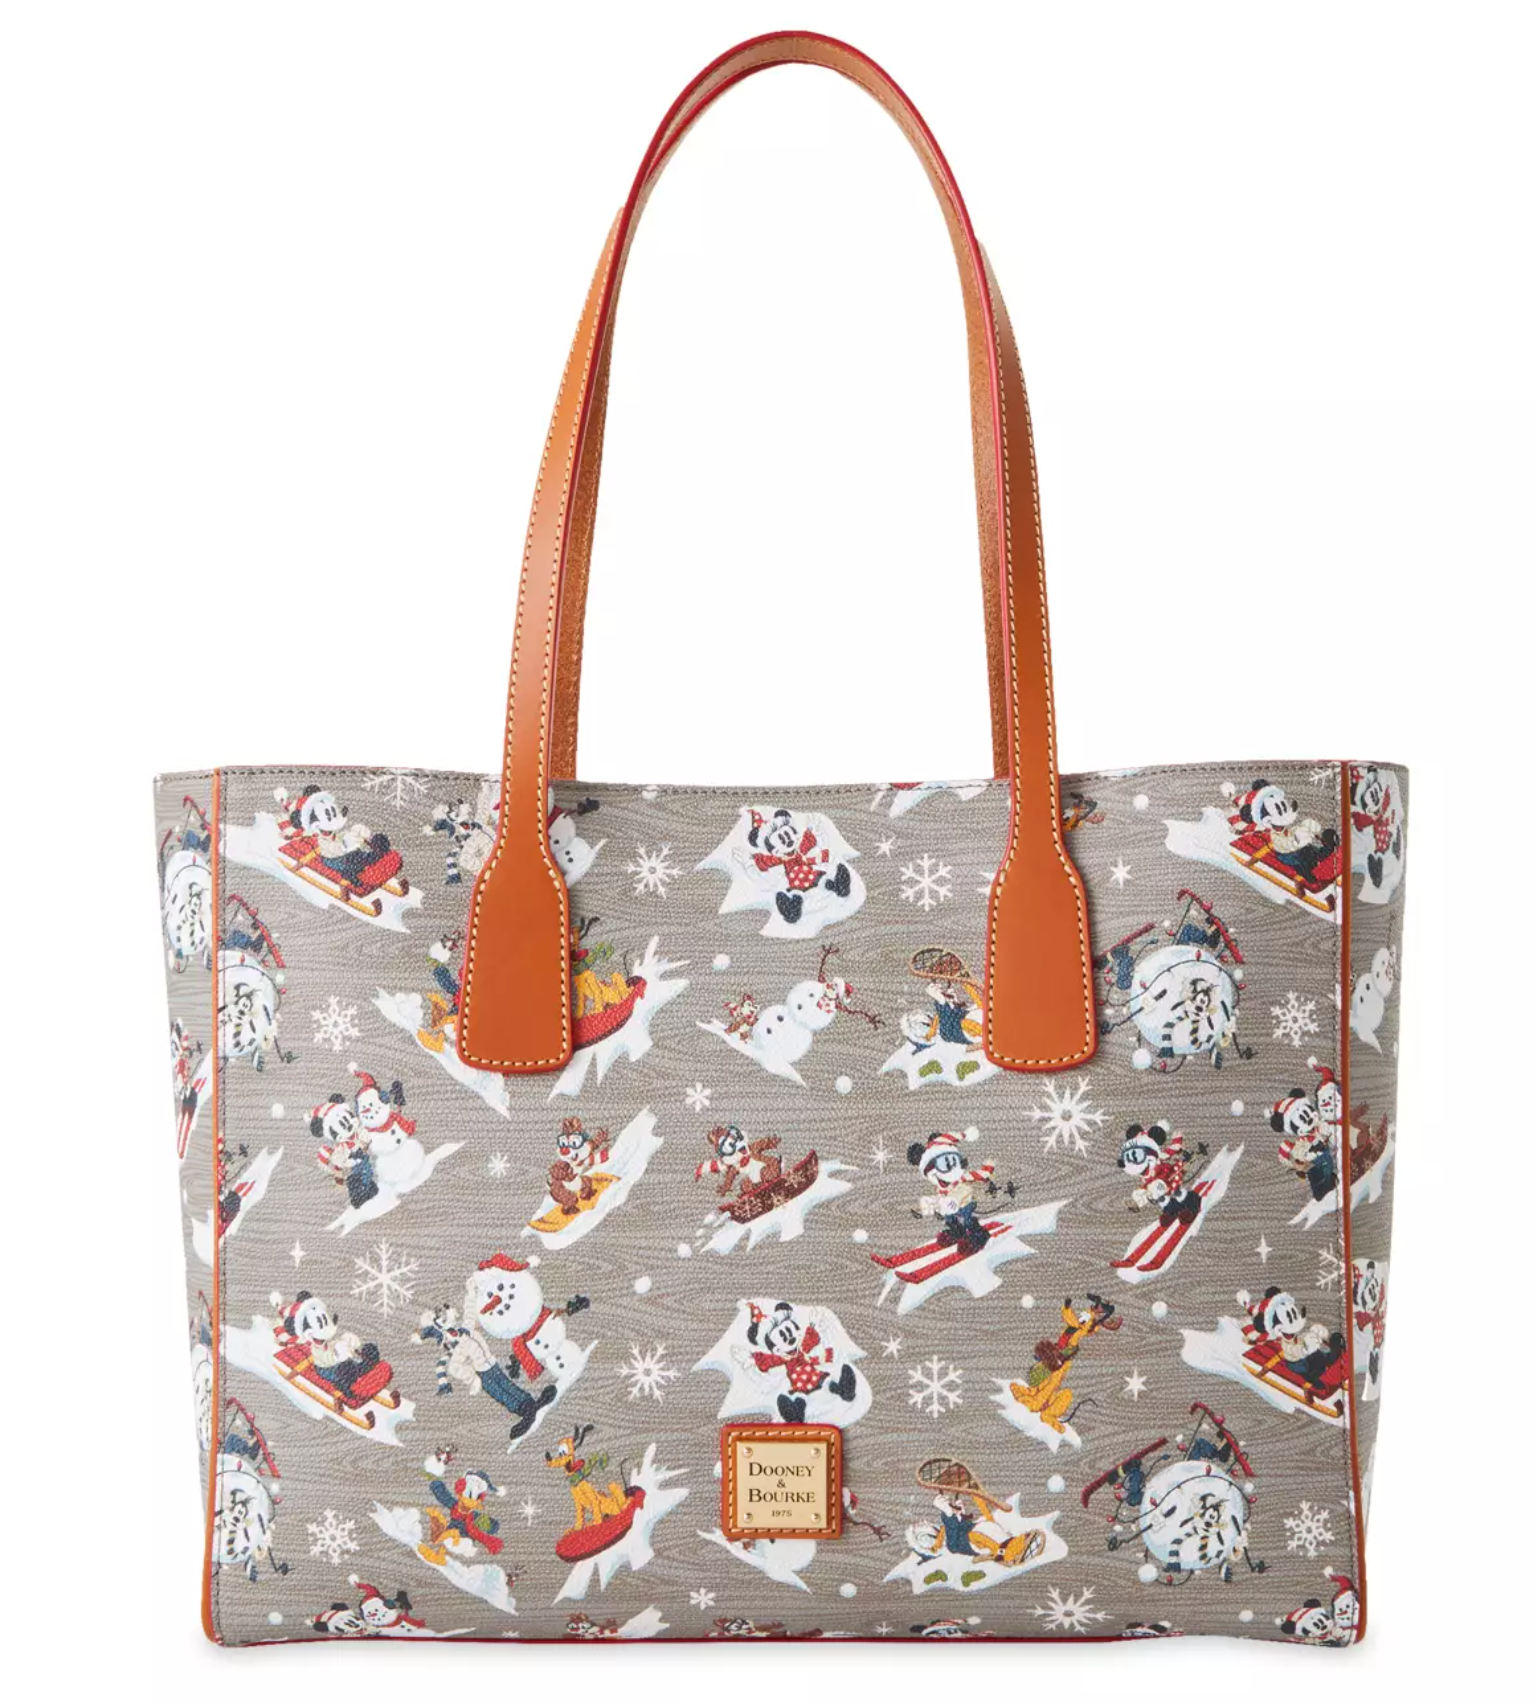 Buy OsaiZ Tan Brown Handbag - Handbags for Women 1086569 | Myntra